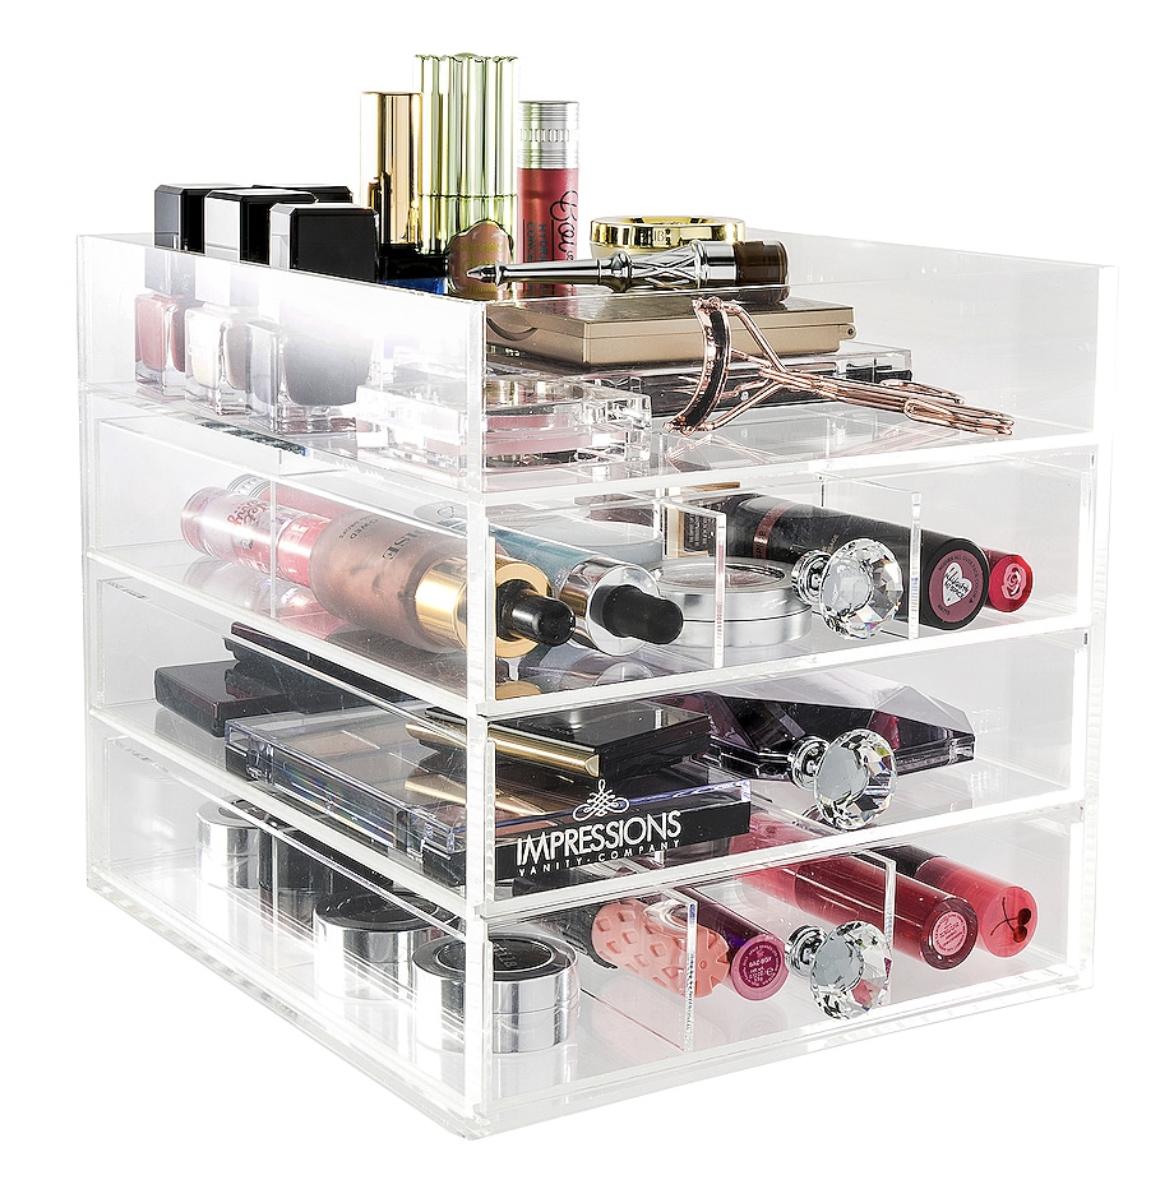 Diamond Collections impressions vanity makeup storage.